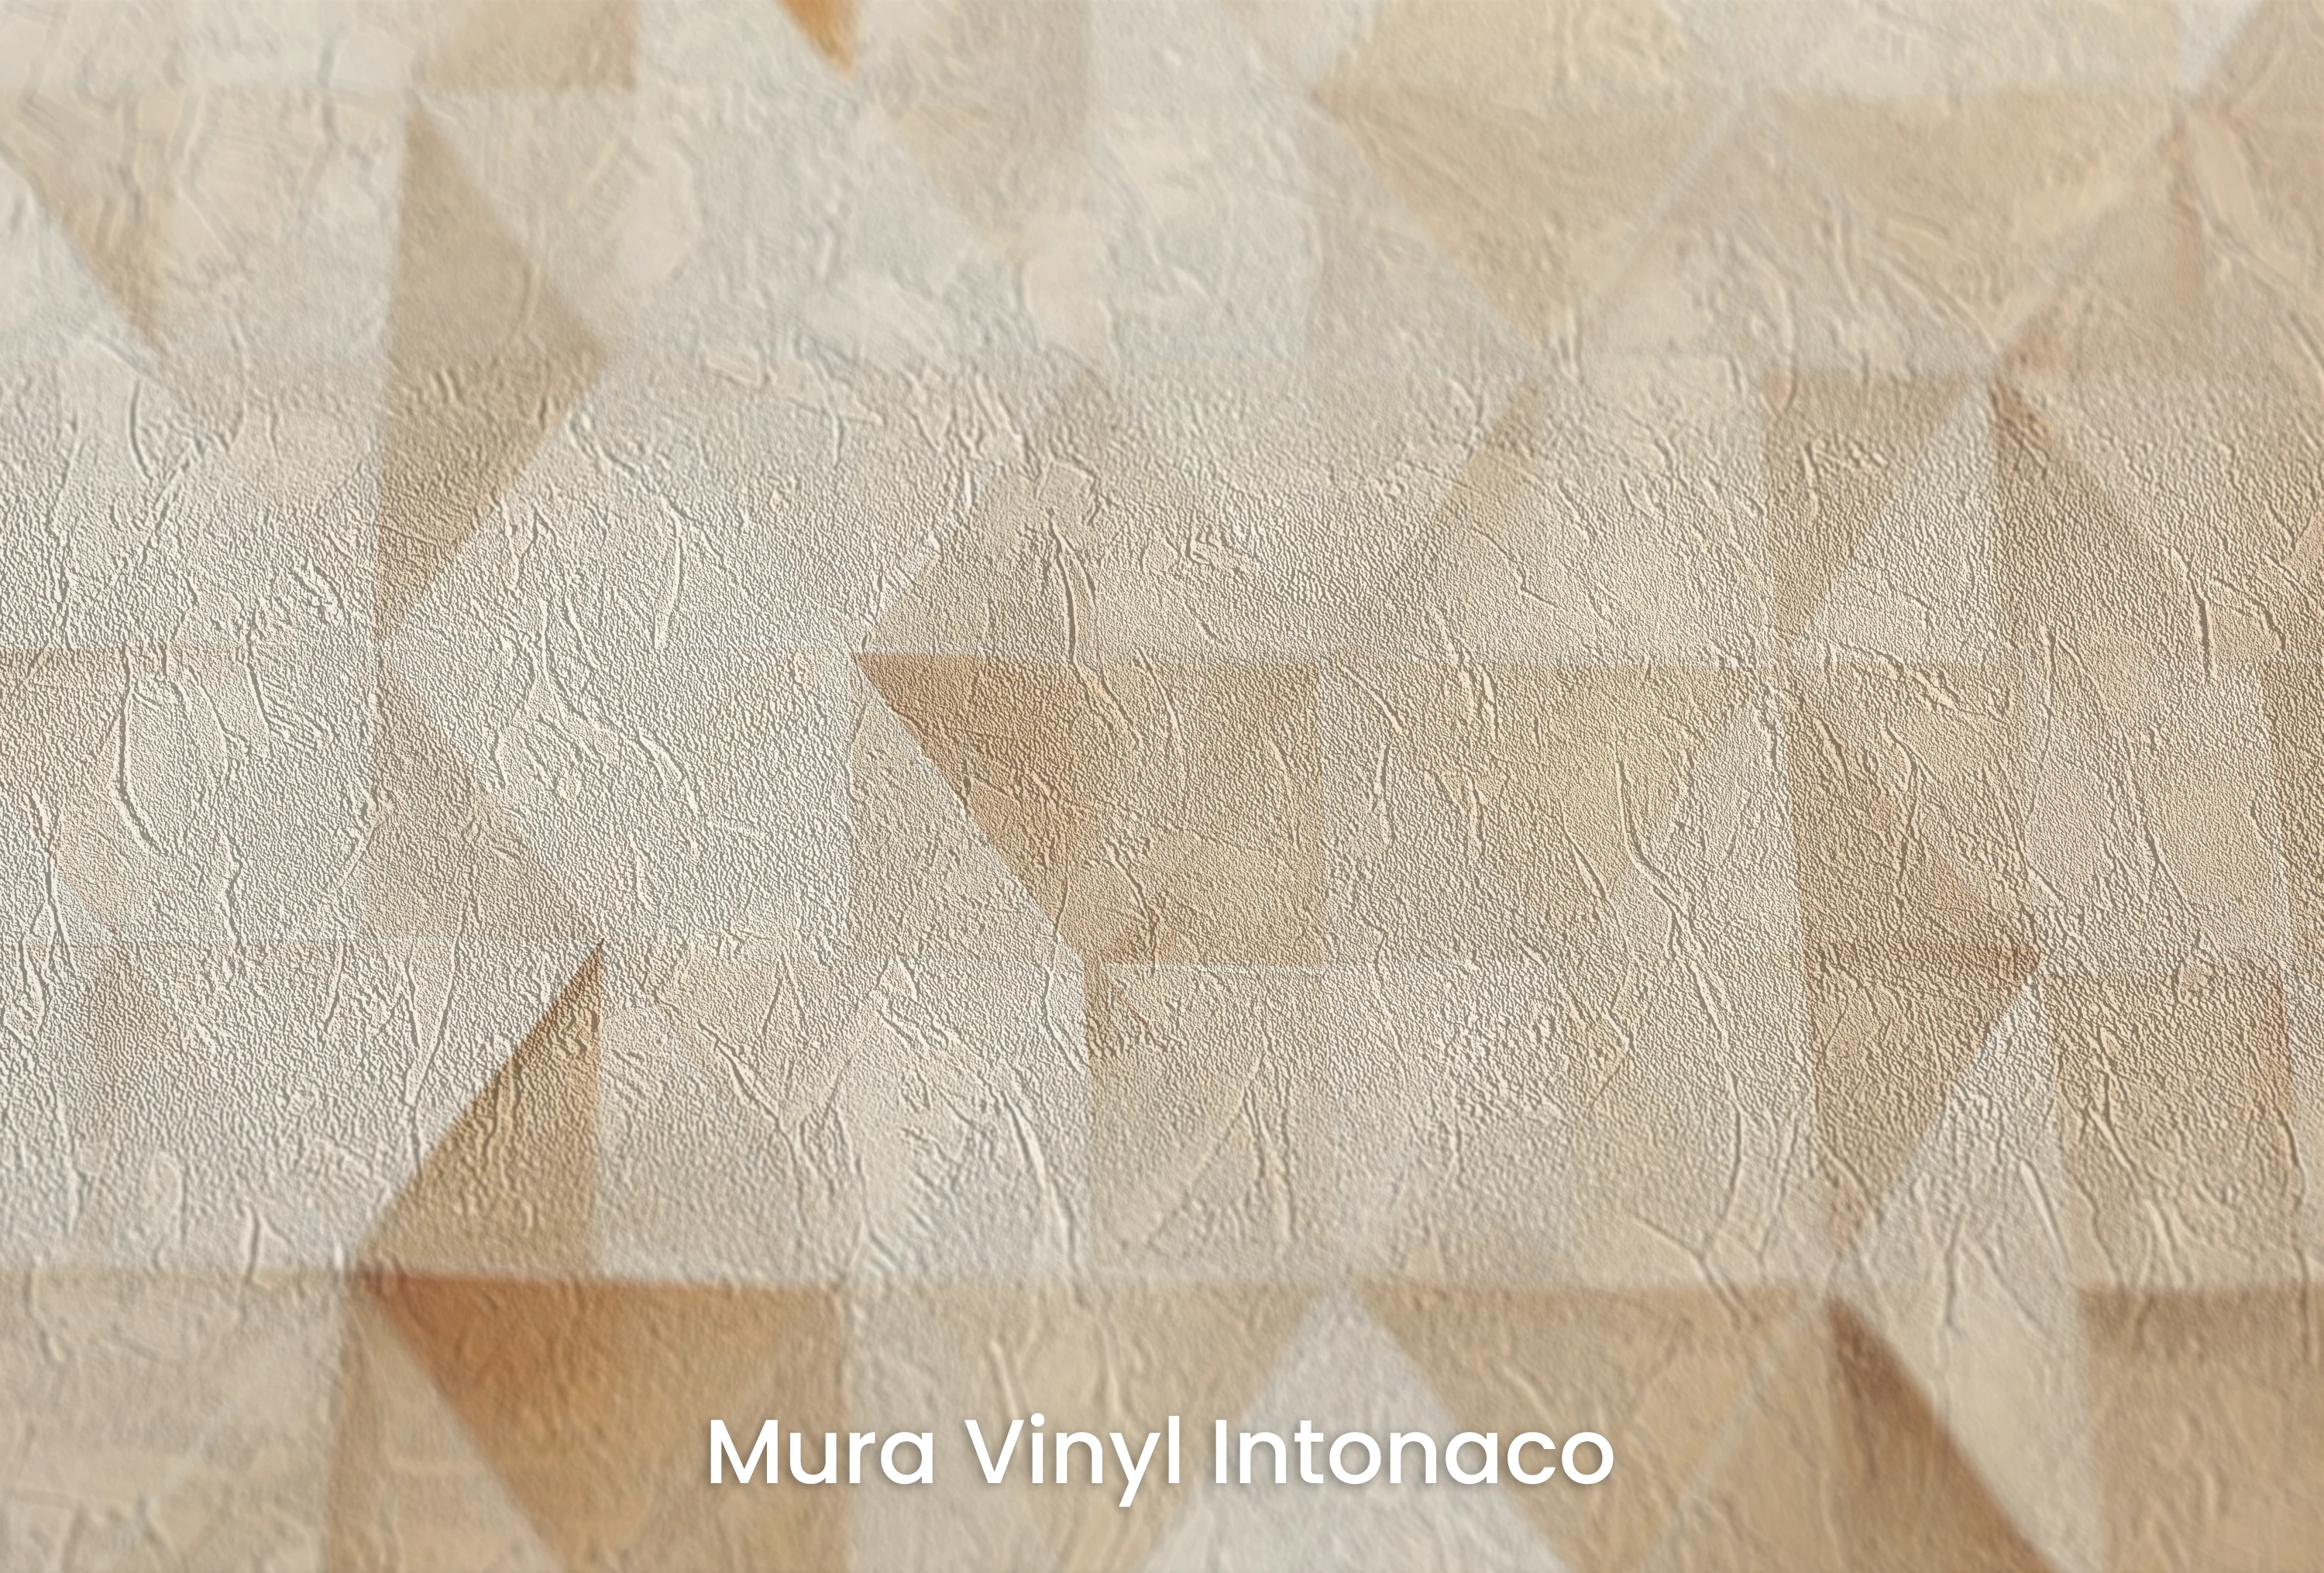 Mura Vinyl Intonaco – Tapete mit einer Textur aus geriebenem Putz